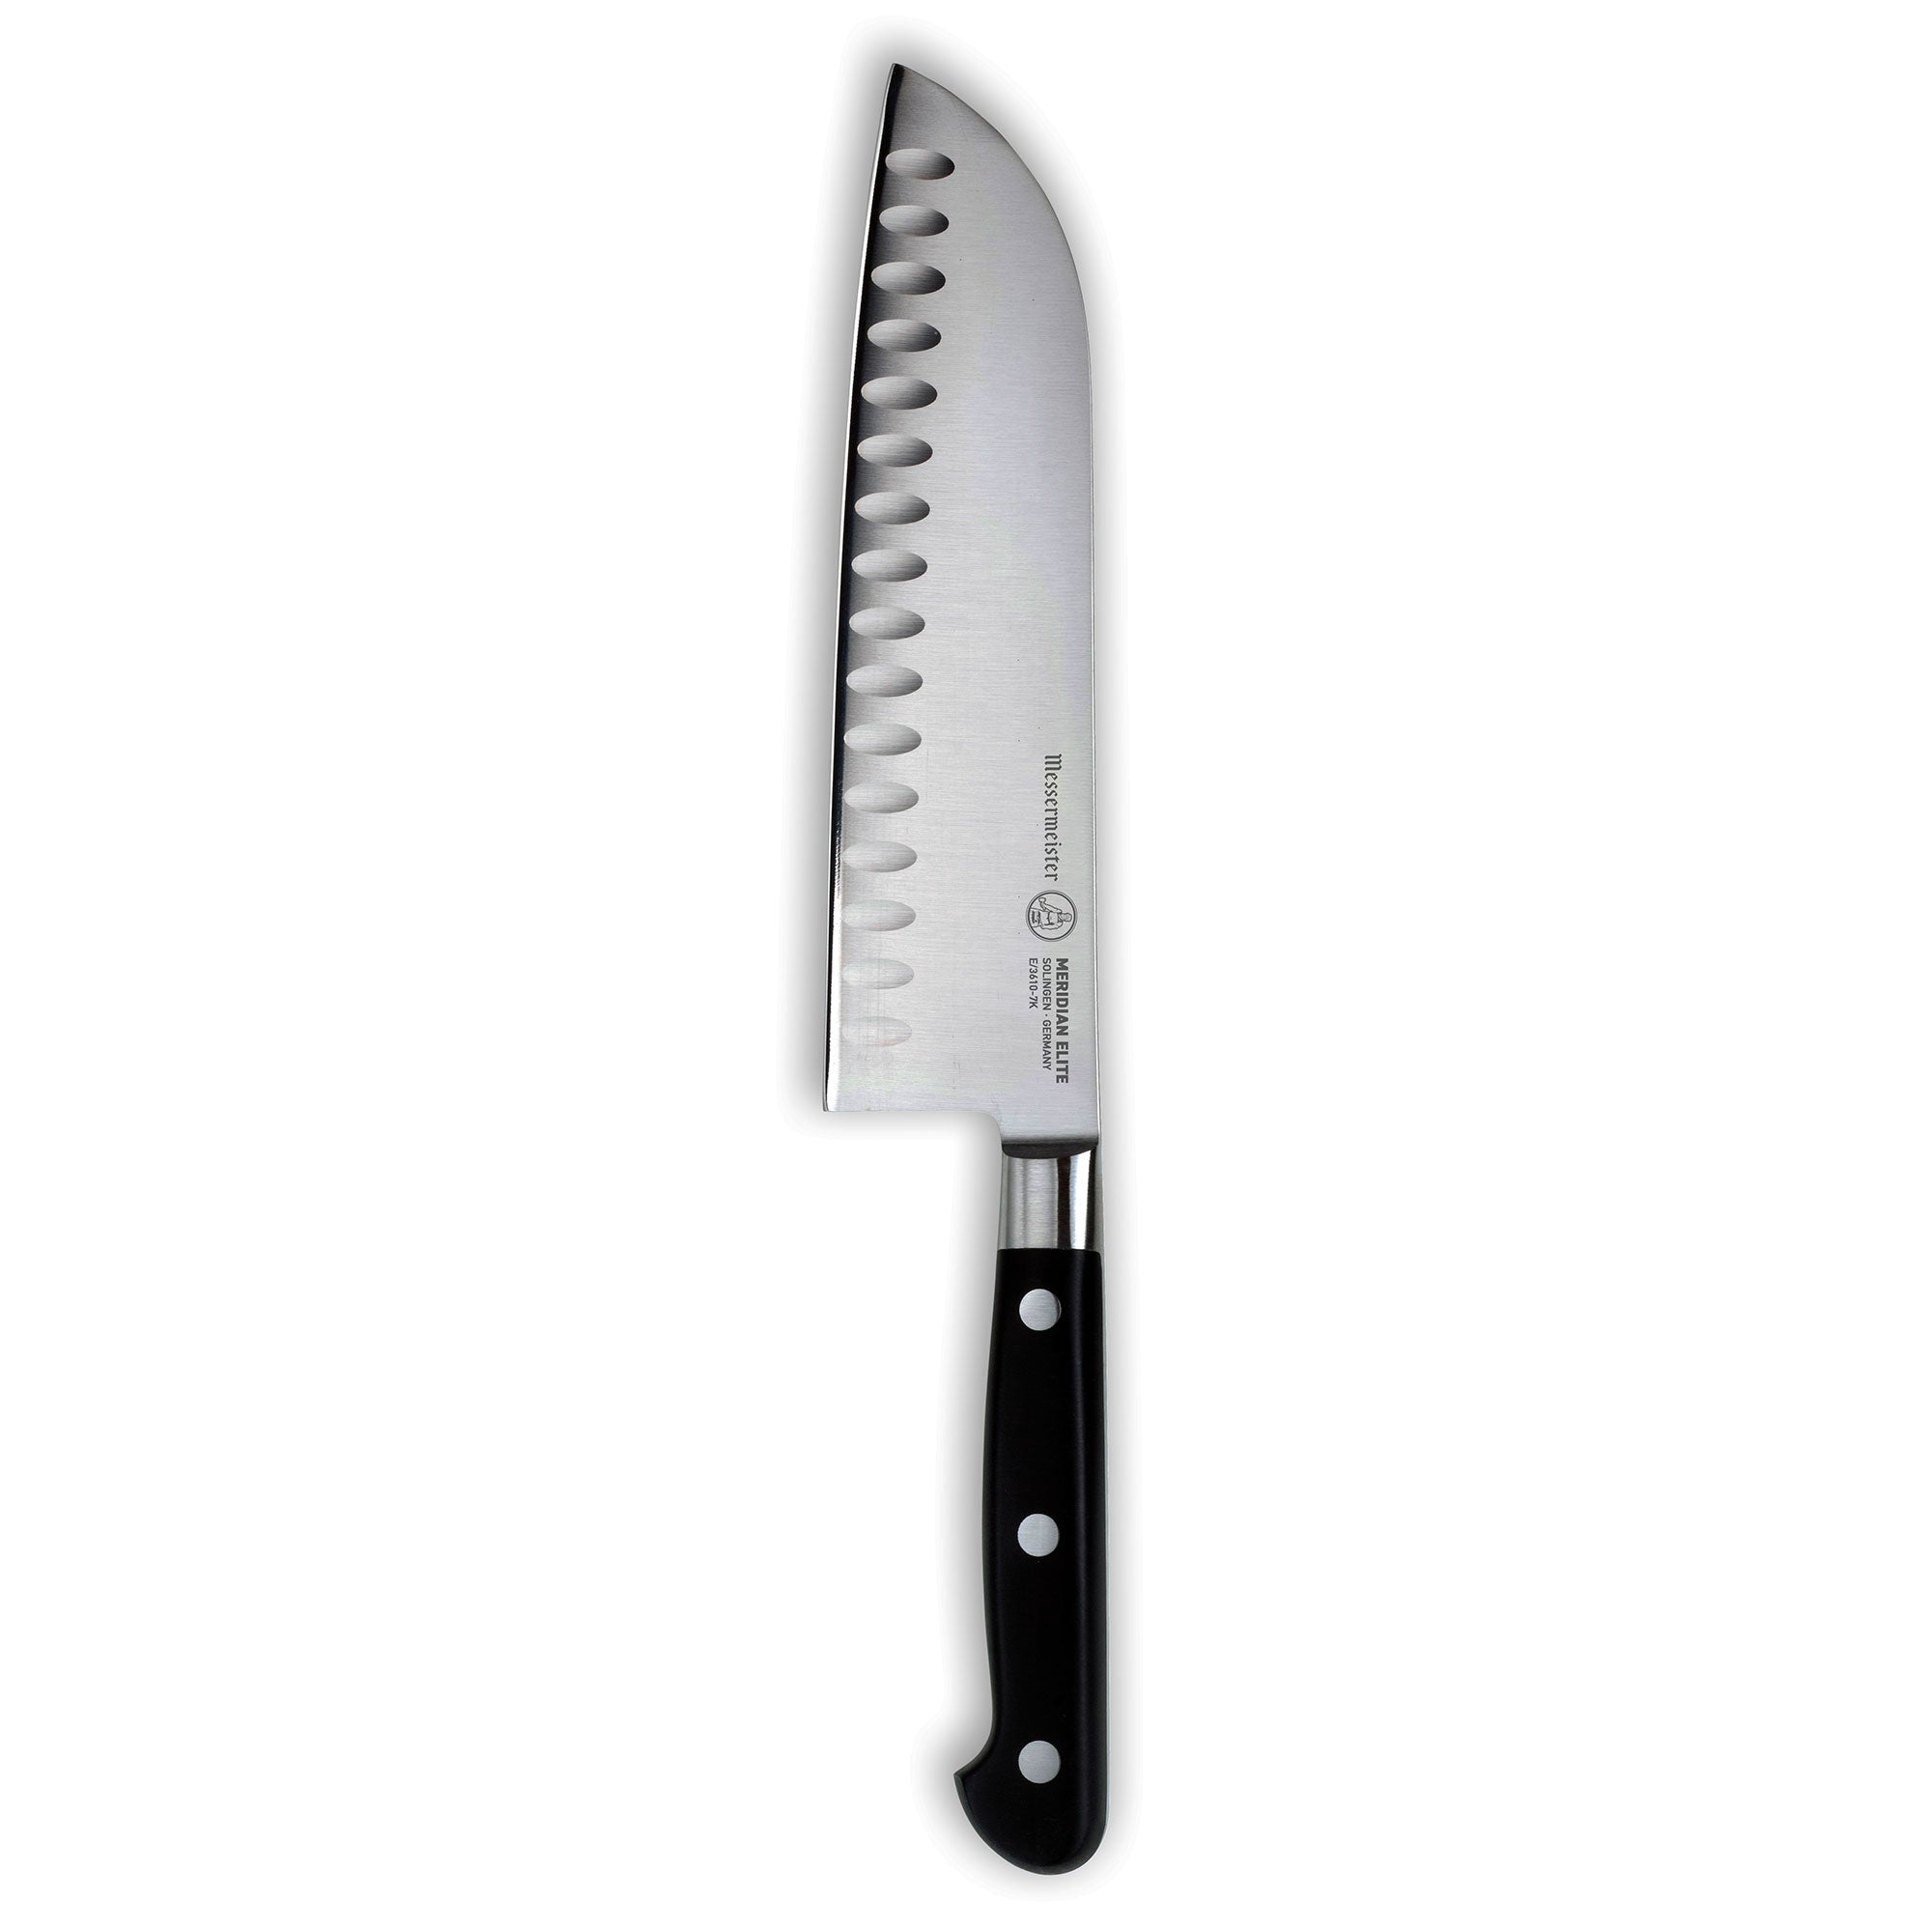 Sold at Auction: Sabatier 5 Piece Forged German Steel Knife Set